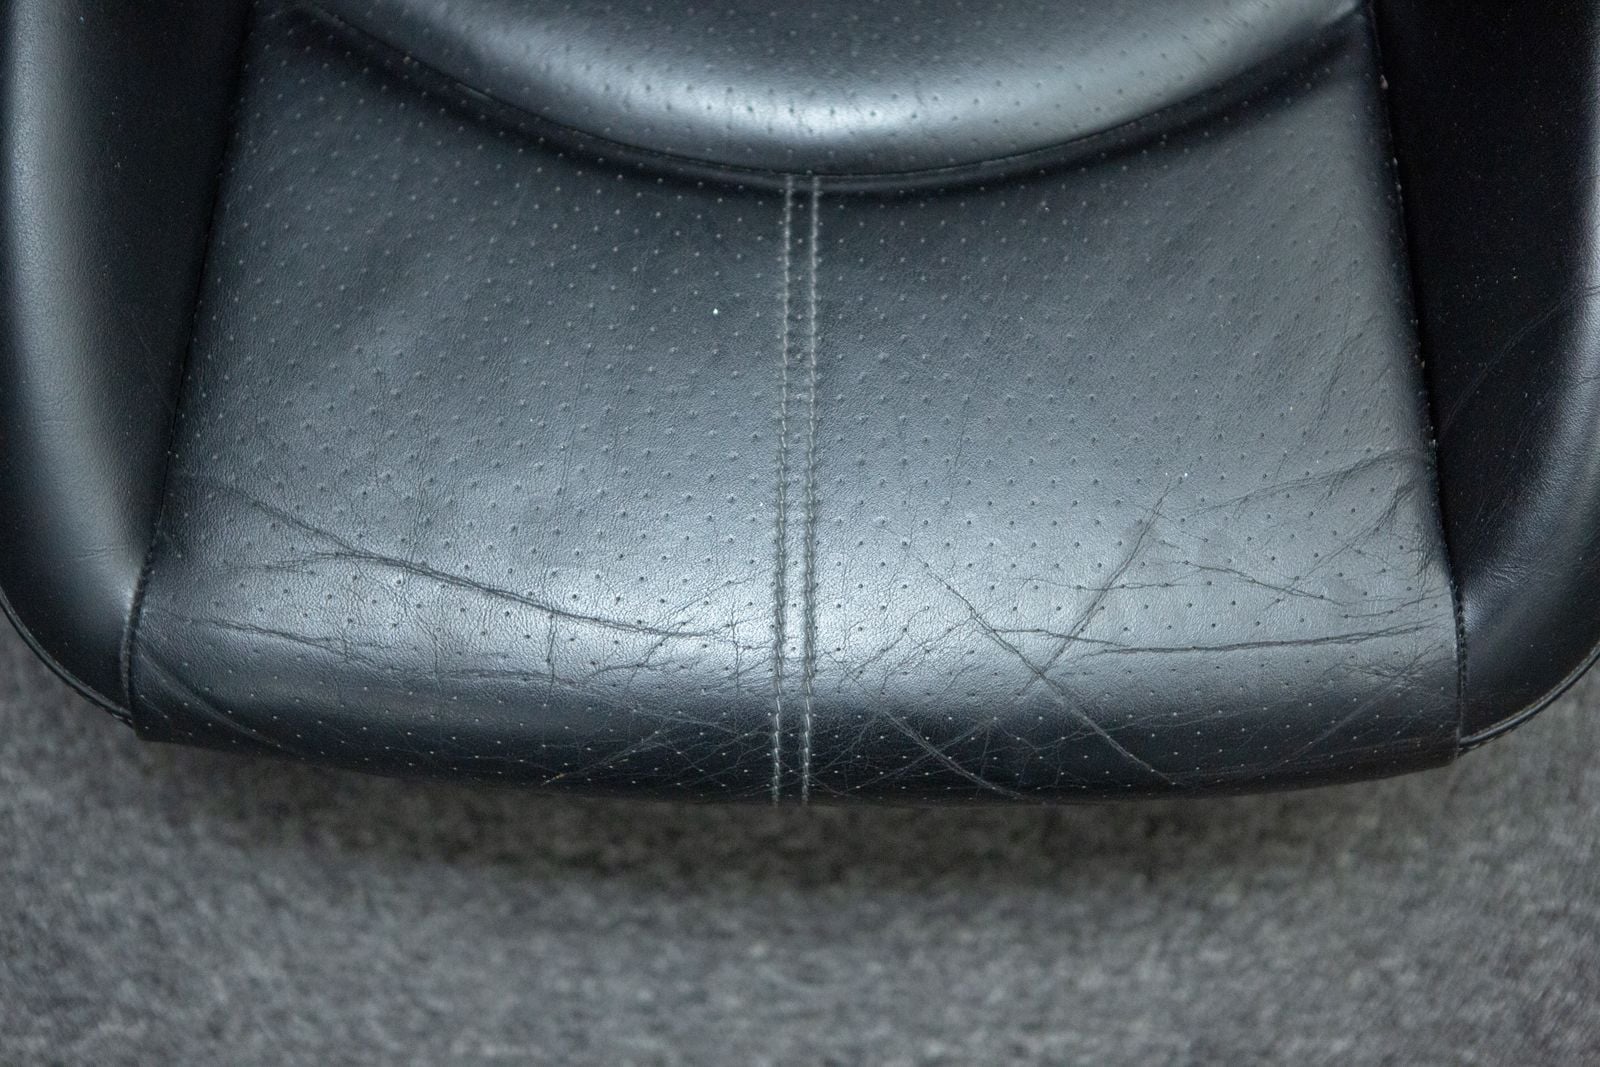 Interior/Upholstery - Track Car Leftovers: 997 OE Seats (Black, Cocoa) - Used - 2005 to 2012 Porsche 911 - Buffalo Grove, IL 60089, United States